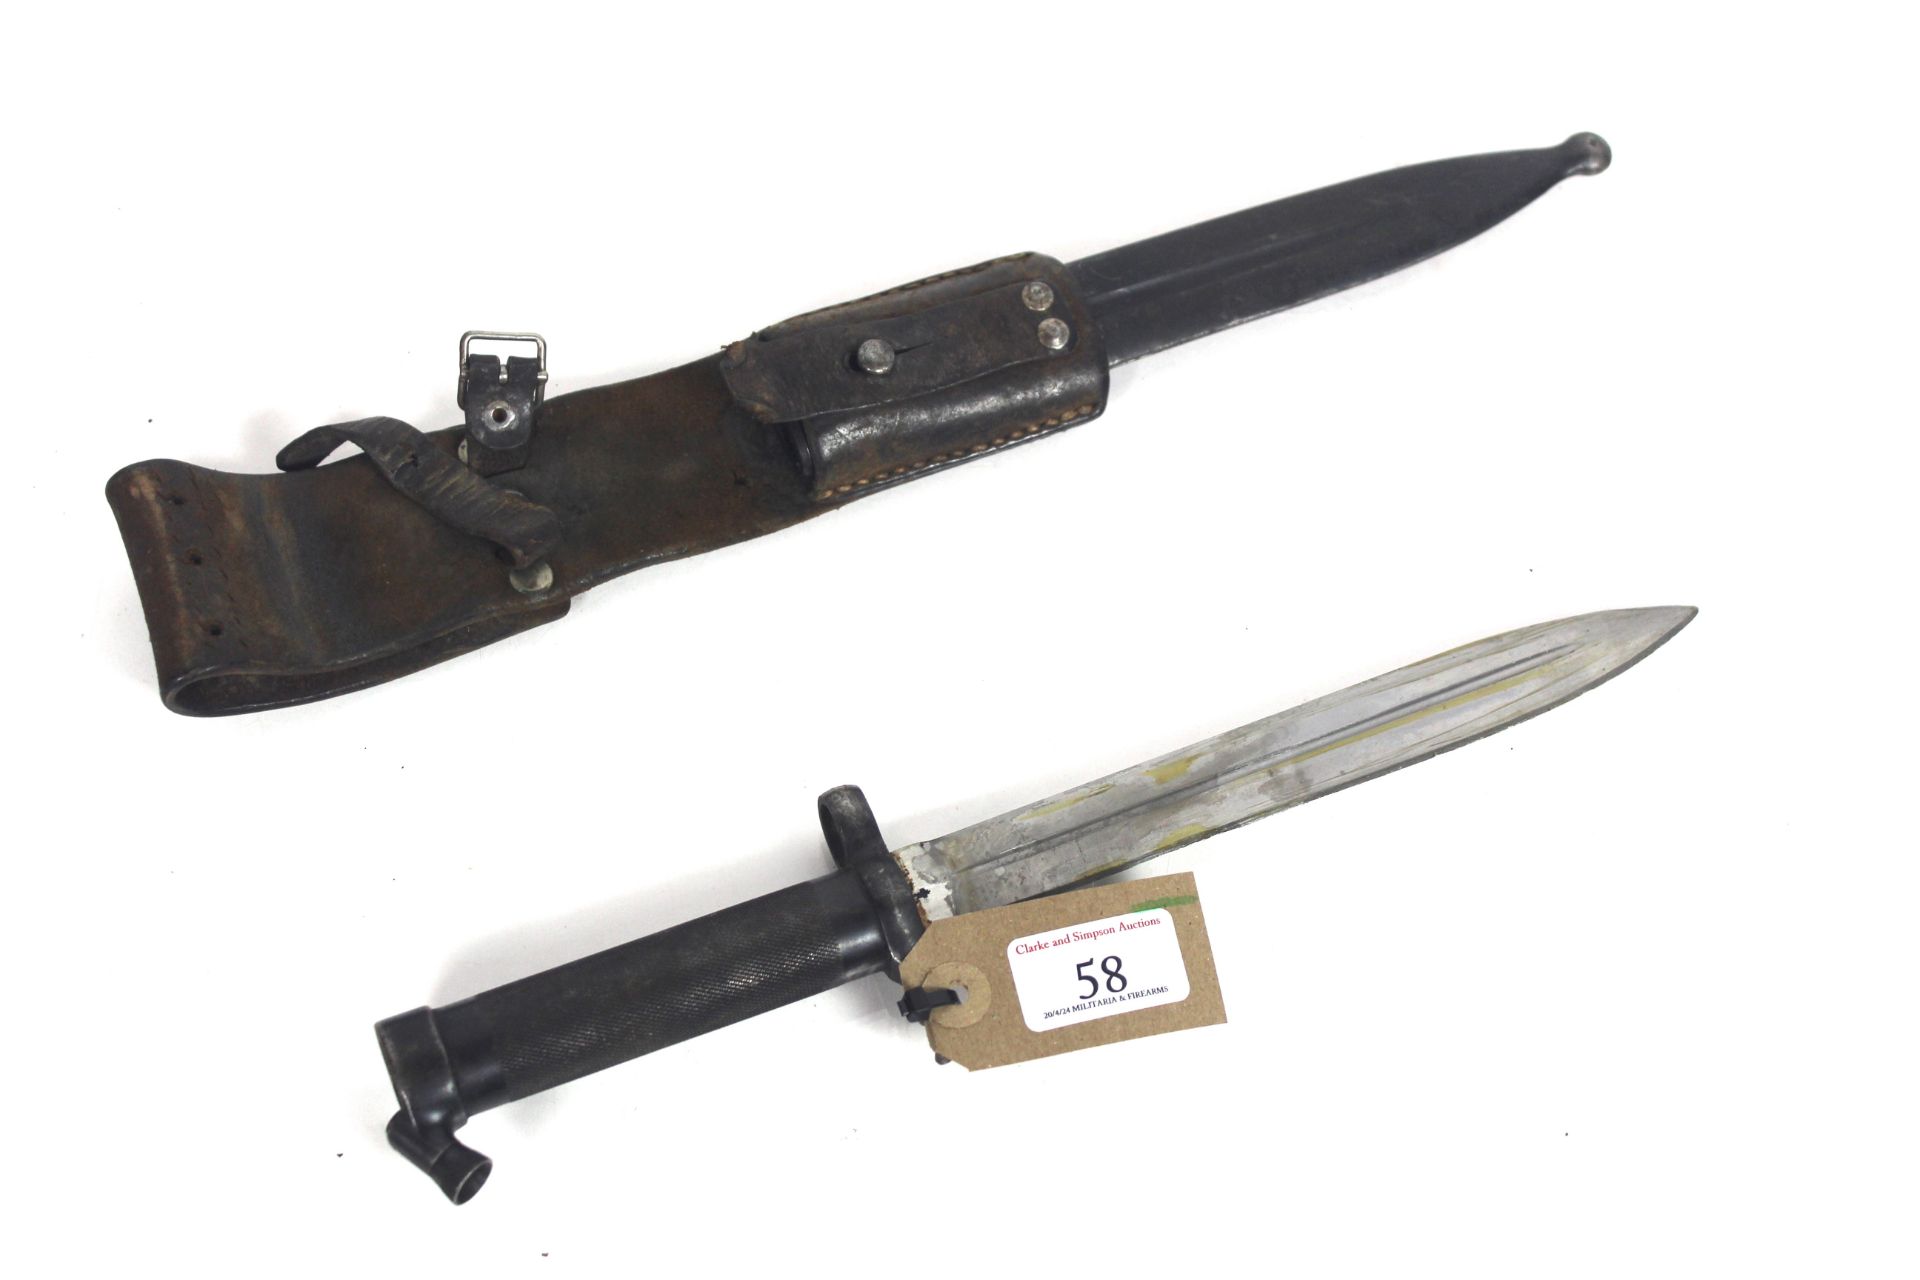 A Swedish model 1896 knife bayonet with scabbard a